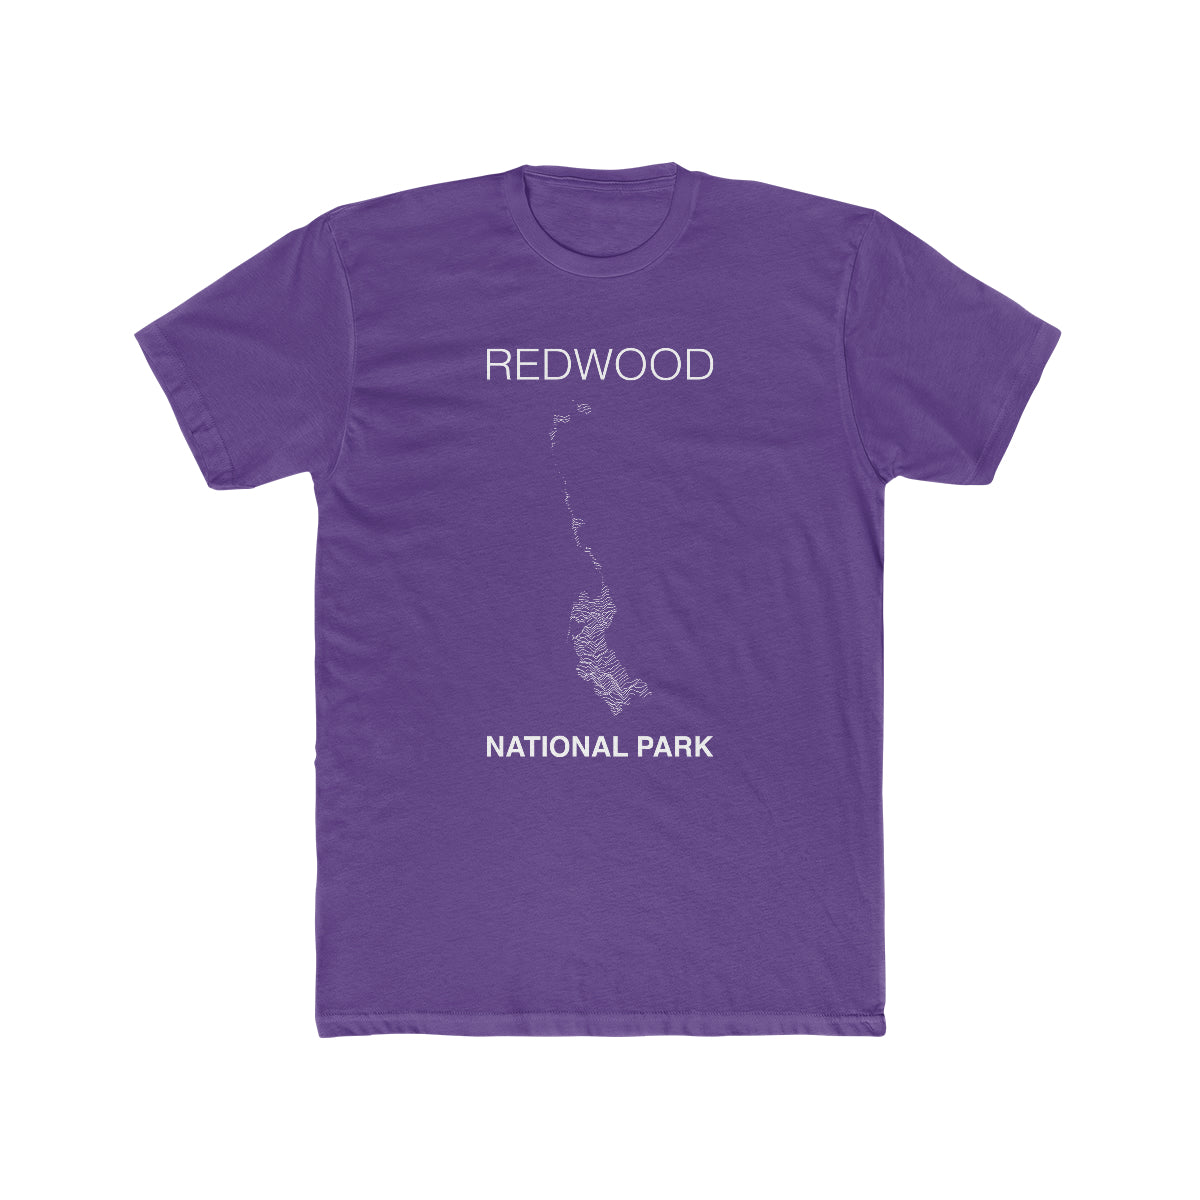 Redwood National Park T-Shirt Lines